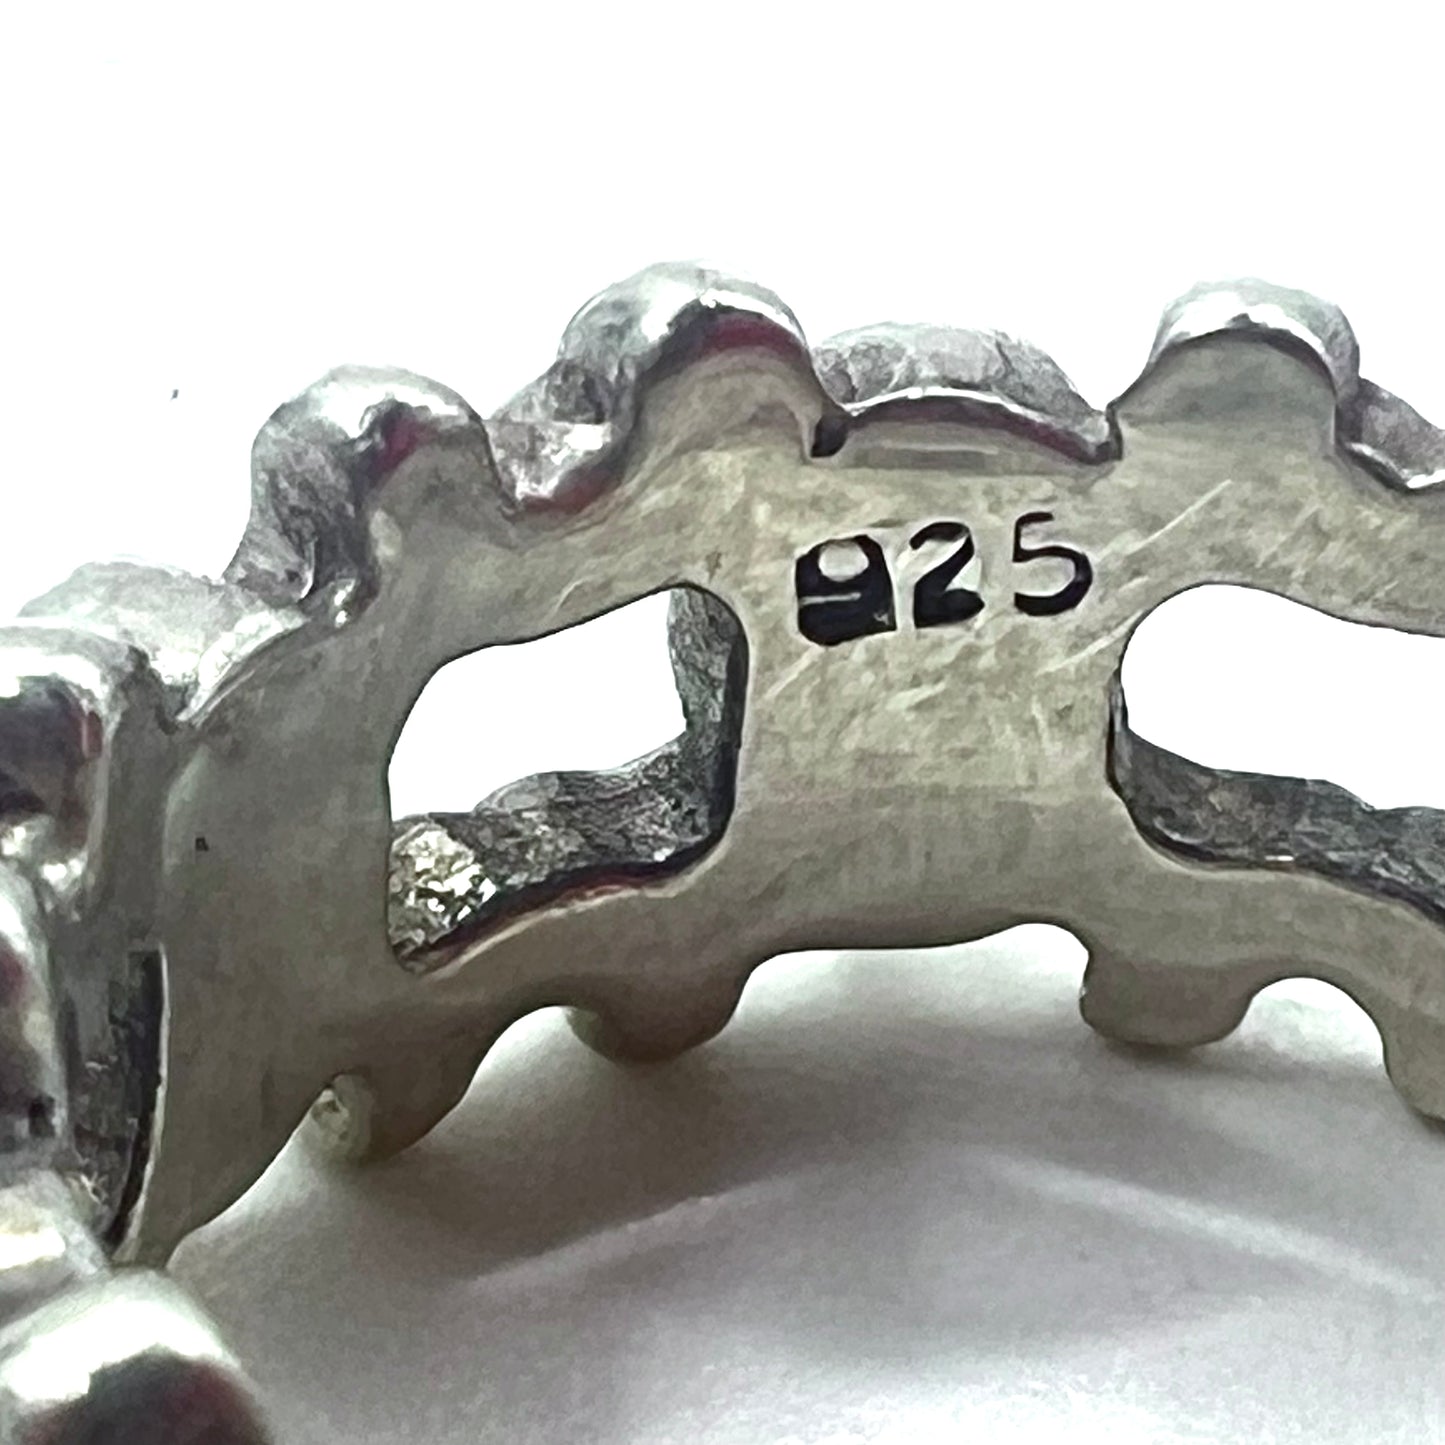 Vintage Silver Skull Ring シルバー スカルリング 指輪 11号 925